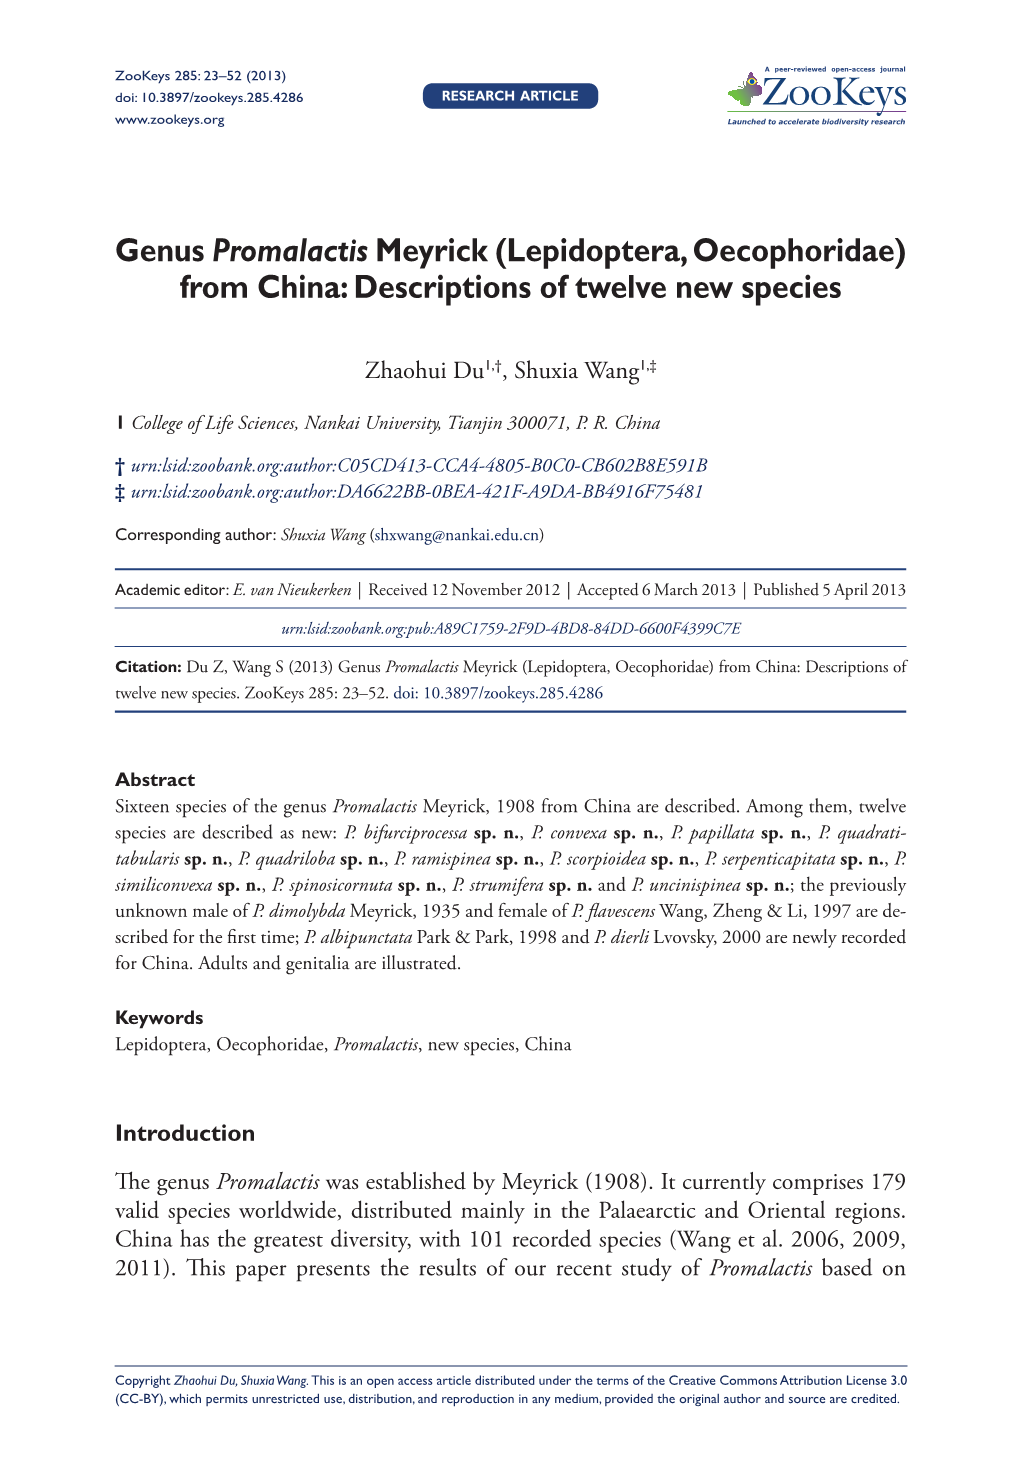 Genus Promalactis Meyrick (Lepidoptera, Oecophoridae) from China: Descriptions of Twelve New Species